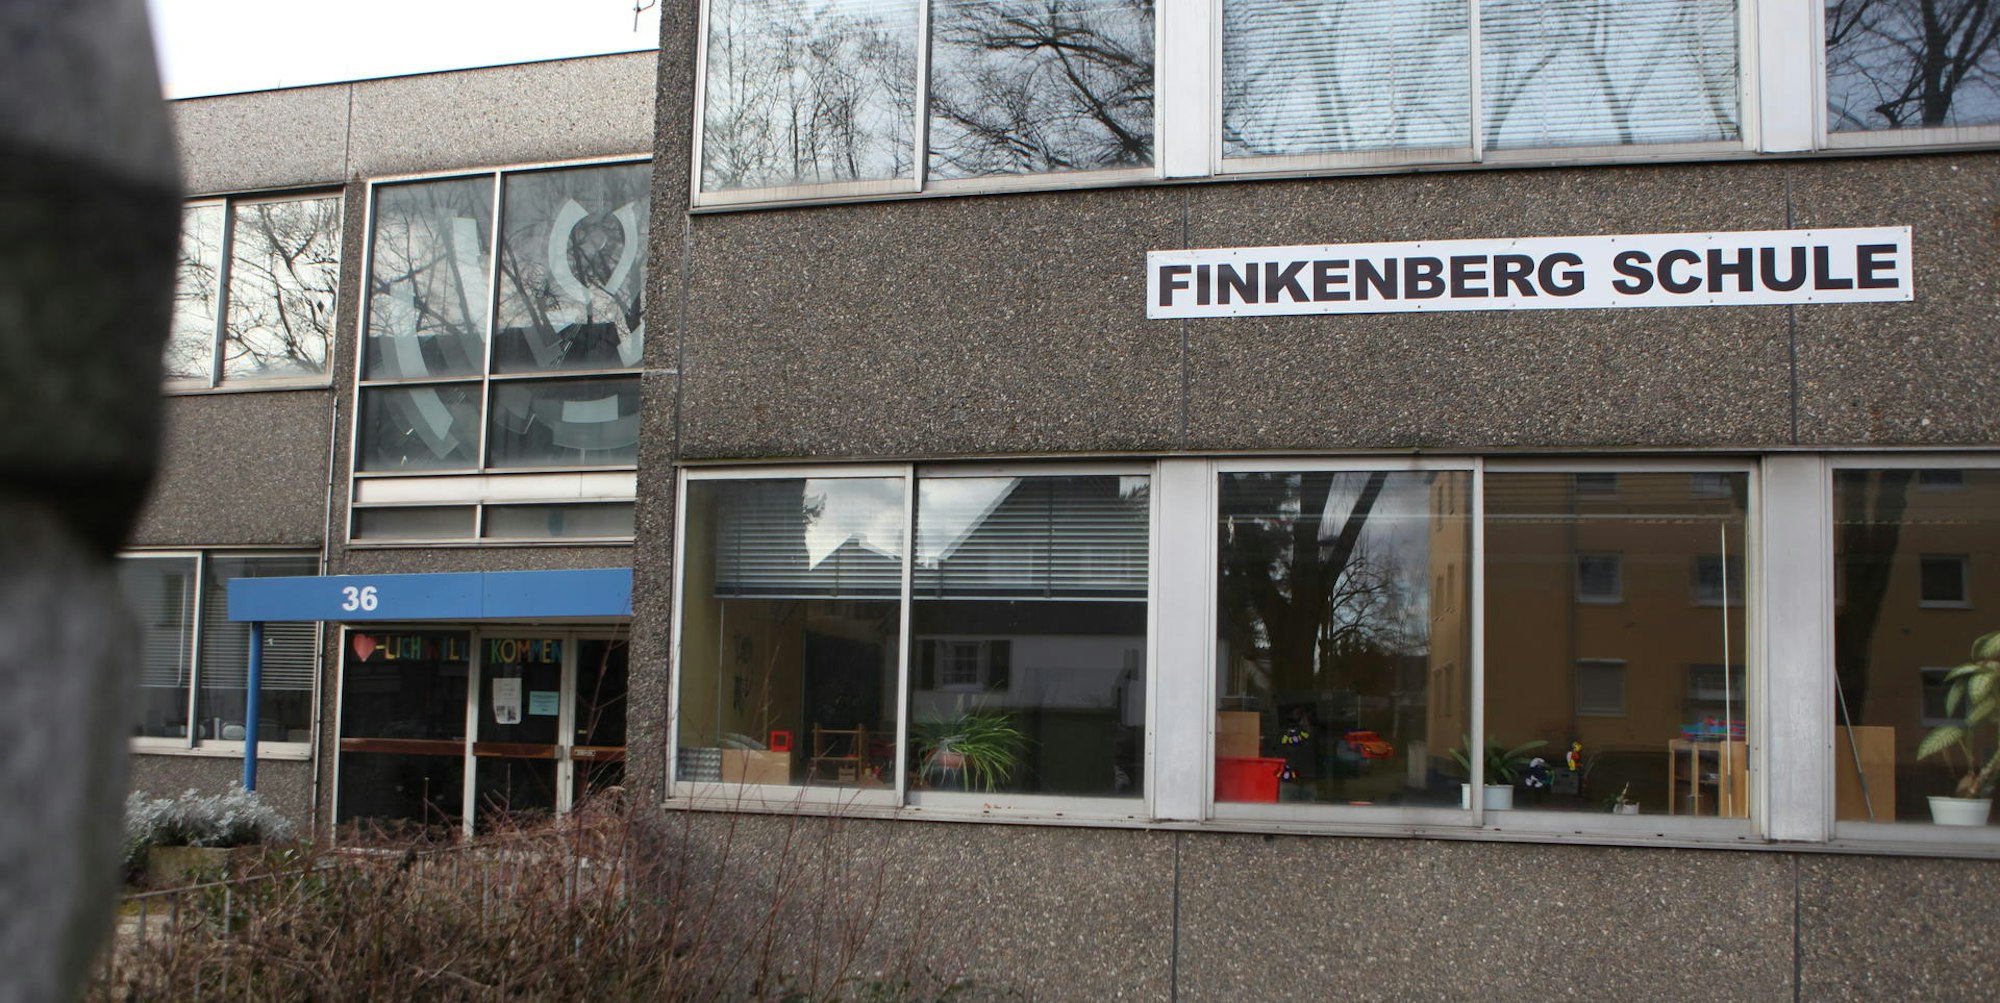 Finkenbergschule